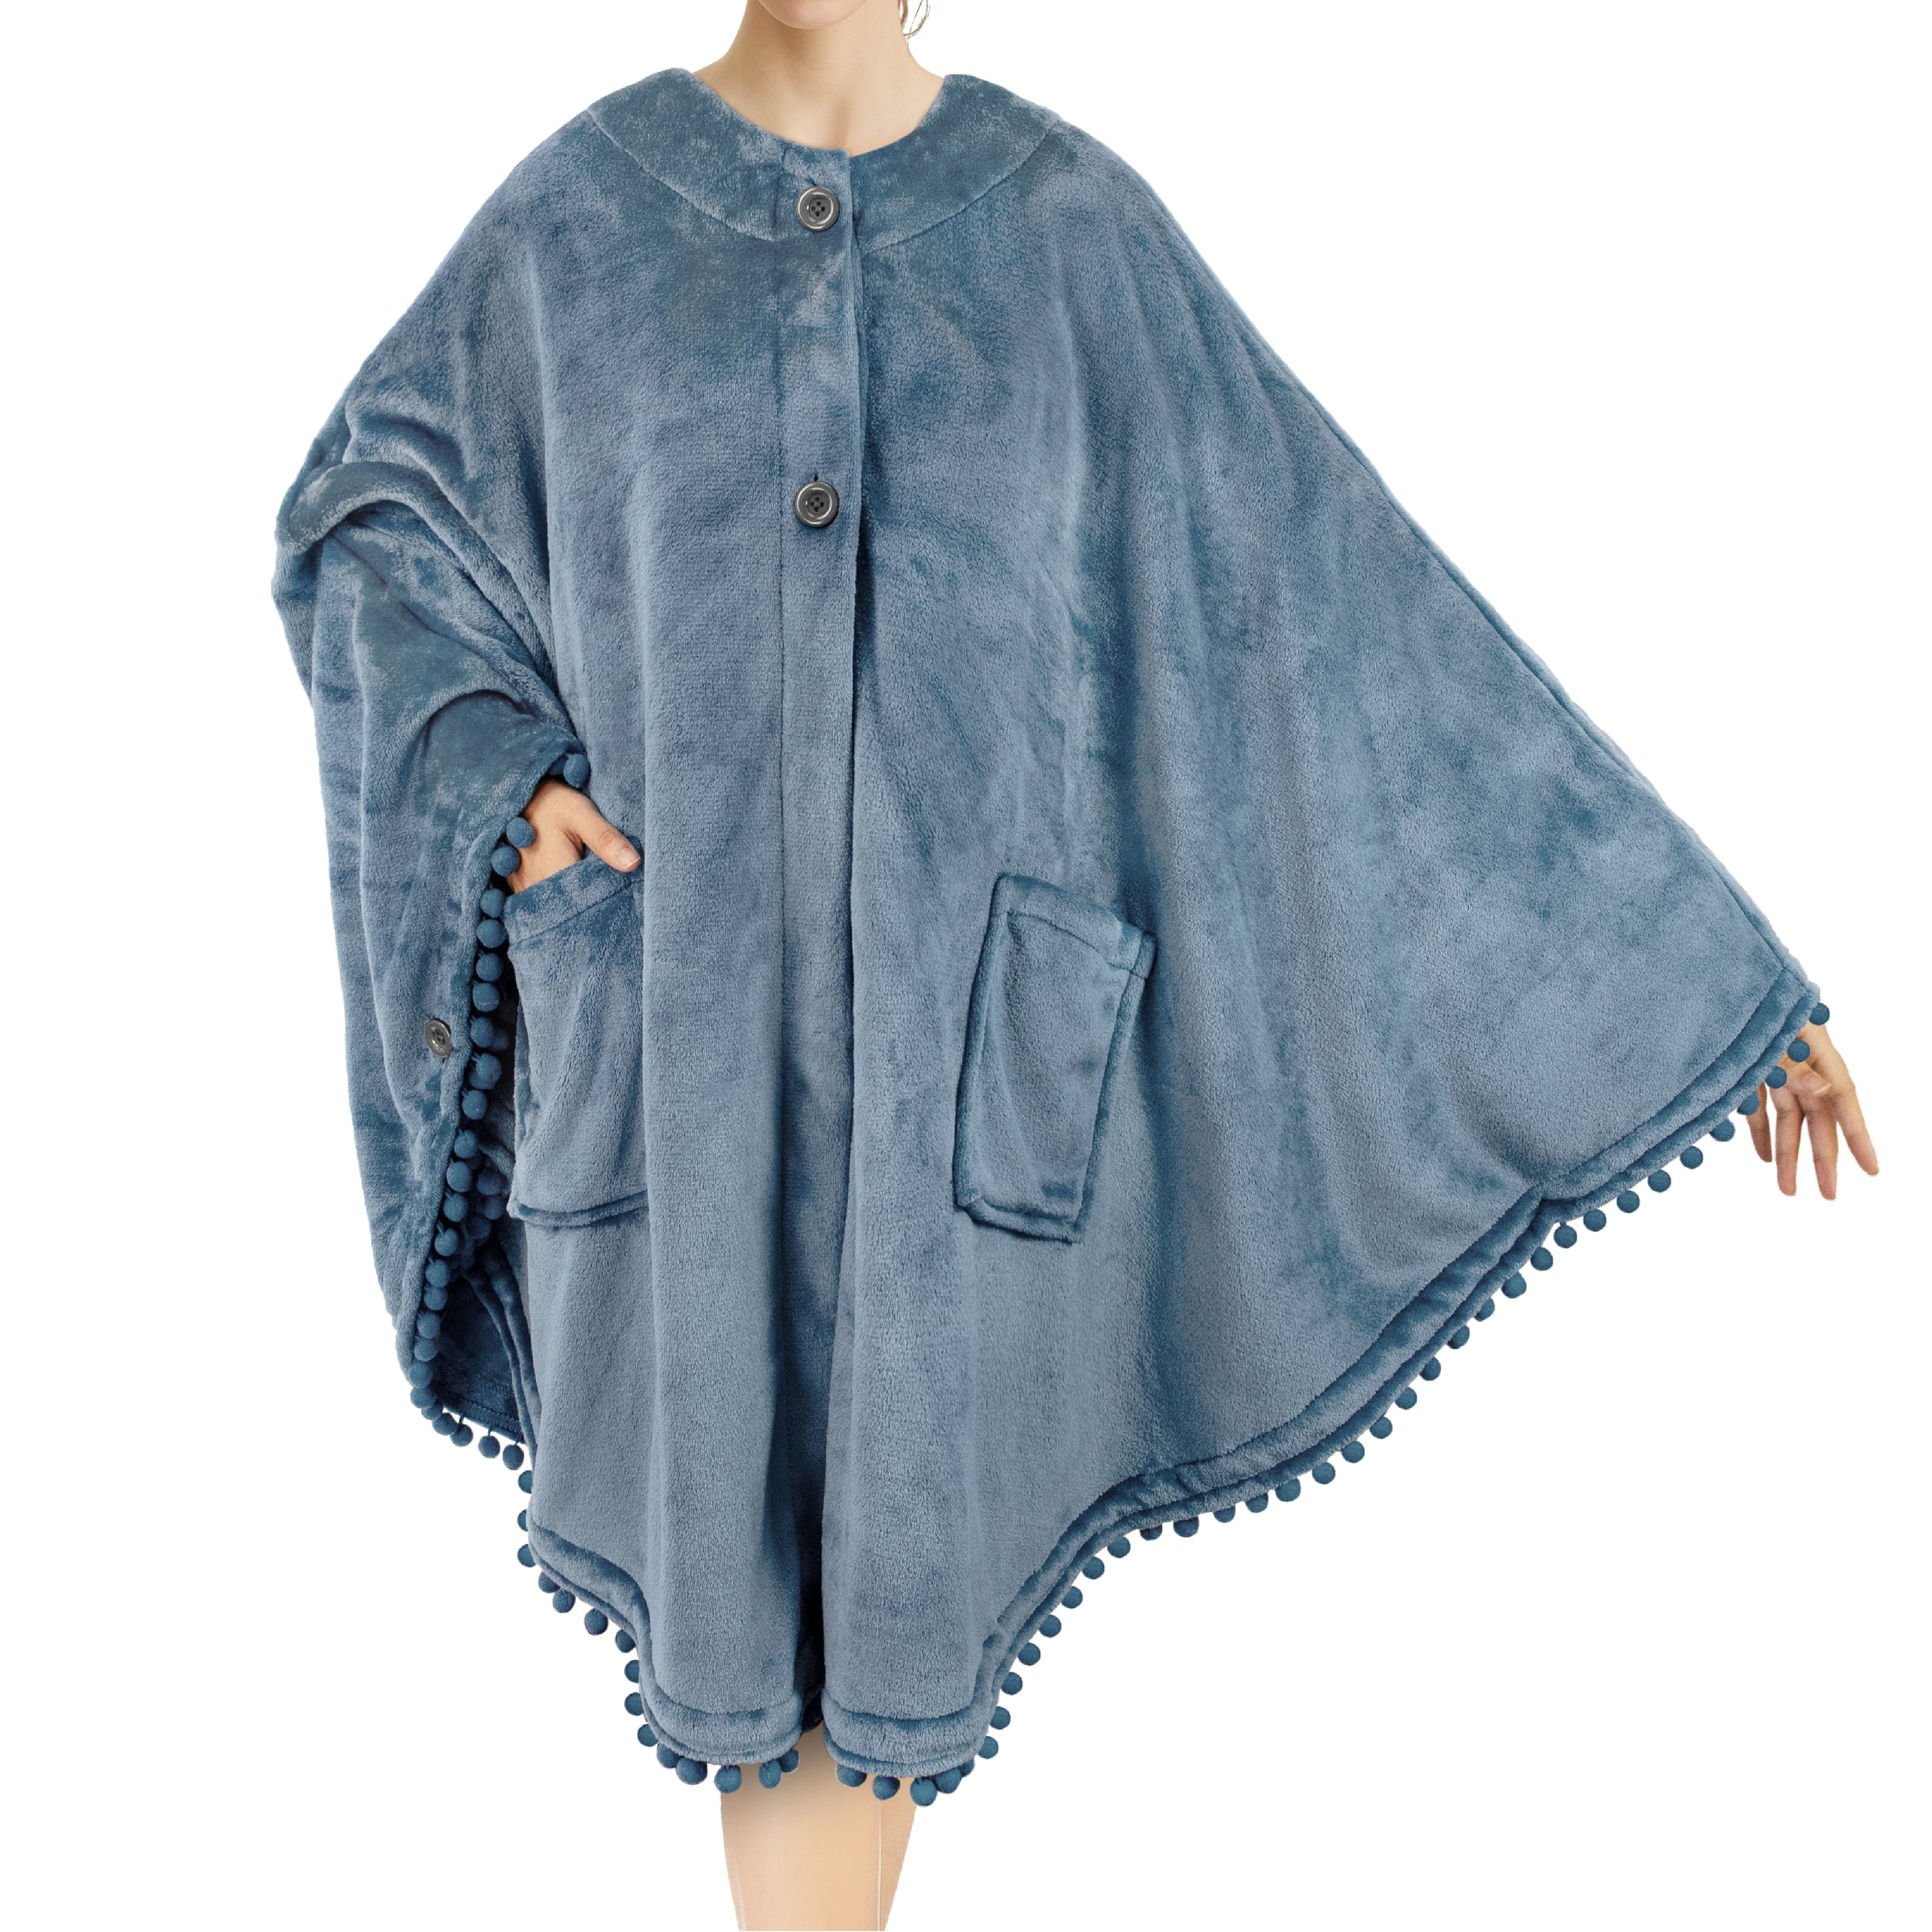 WHOLESALE BULK LOT OF 10 MIXE Style Blanket Poncho Cloak Warm SCARF/SHAWL sc071 